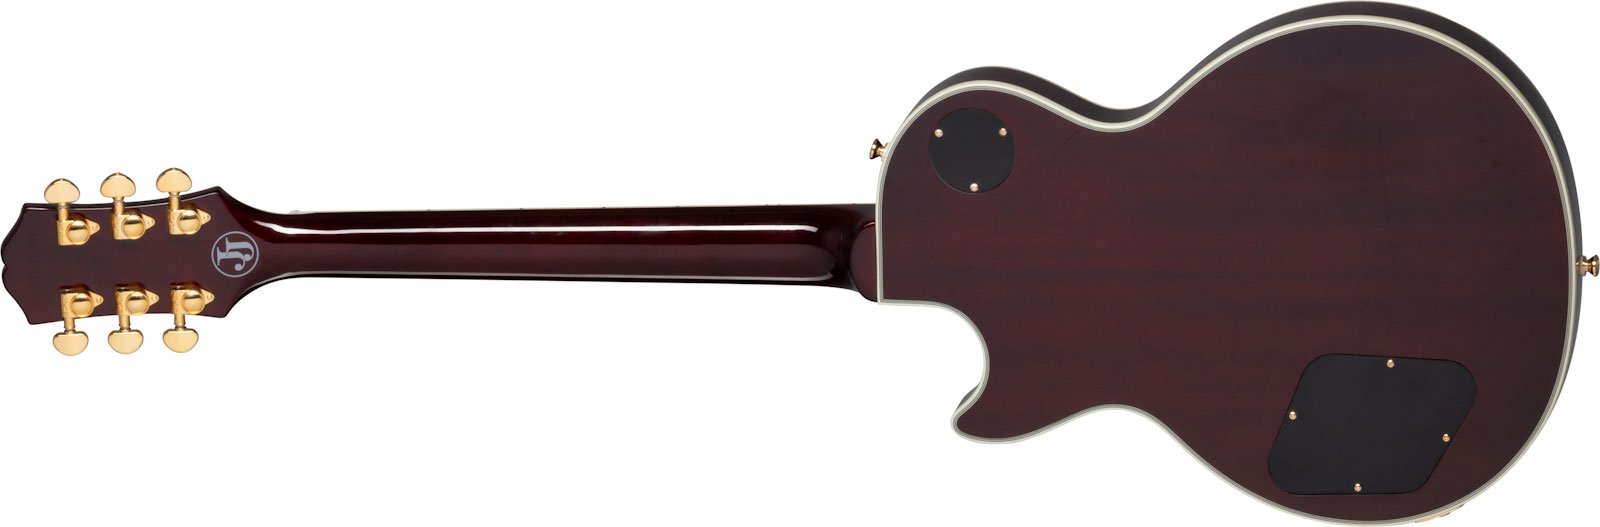 Epiphone Jerry Cantrell Les Paul Custom Wino Signature 2h Ht Eb - Wine Red - Guitarra eléctrica de corte único. - Variation 1